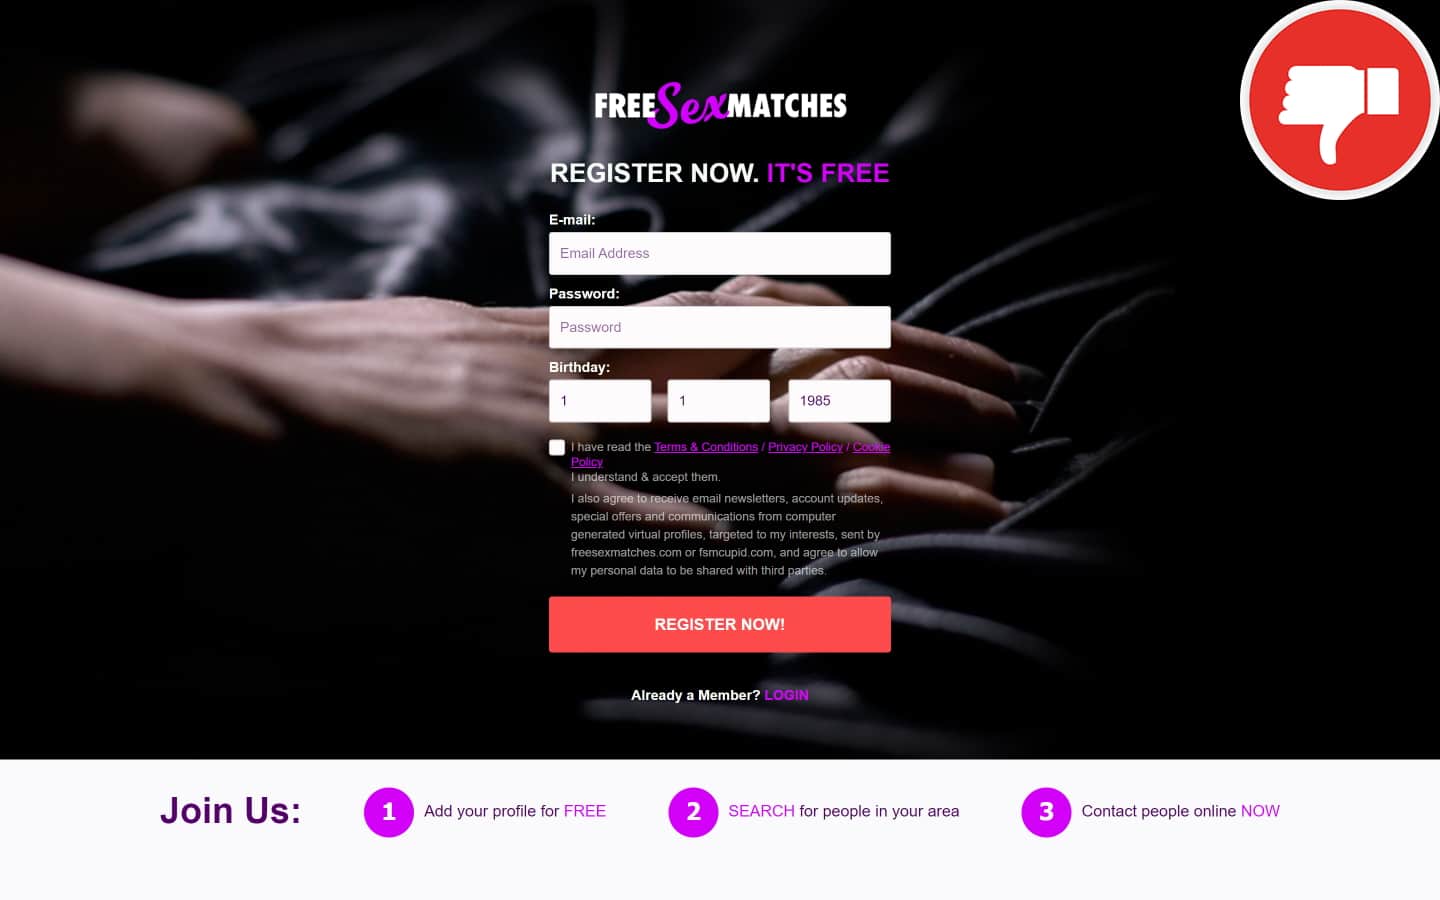 Review FreeSexMatches.com scam experience